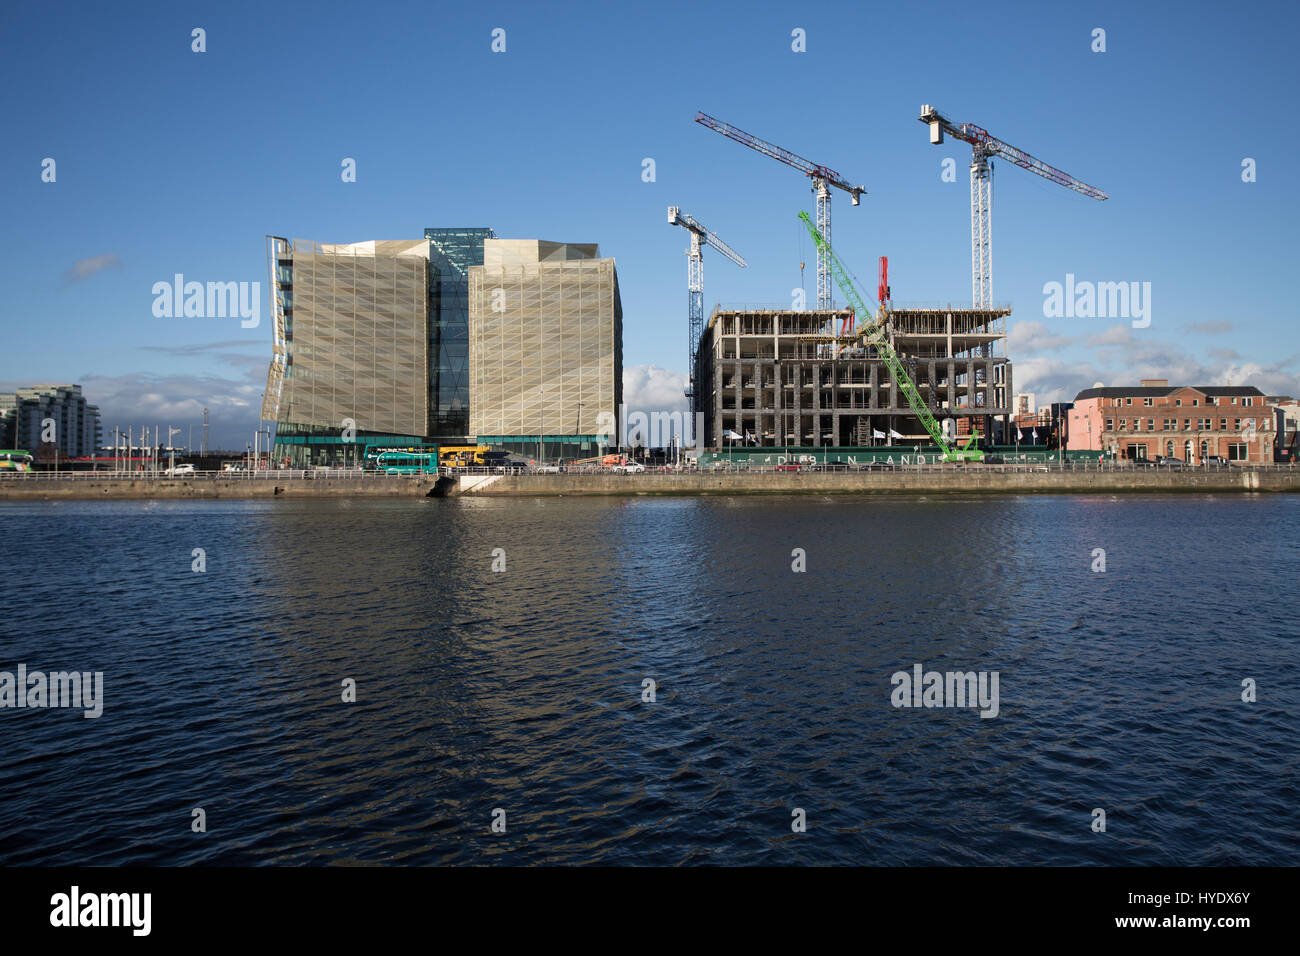 Construction work in the Dublin city docklands, Ireland. Stock Photo